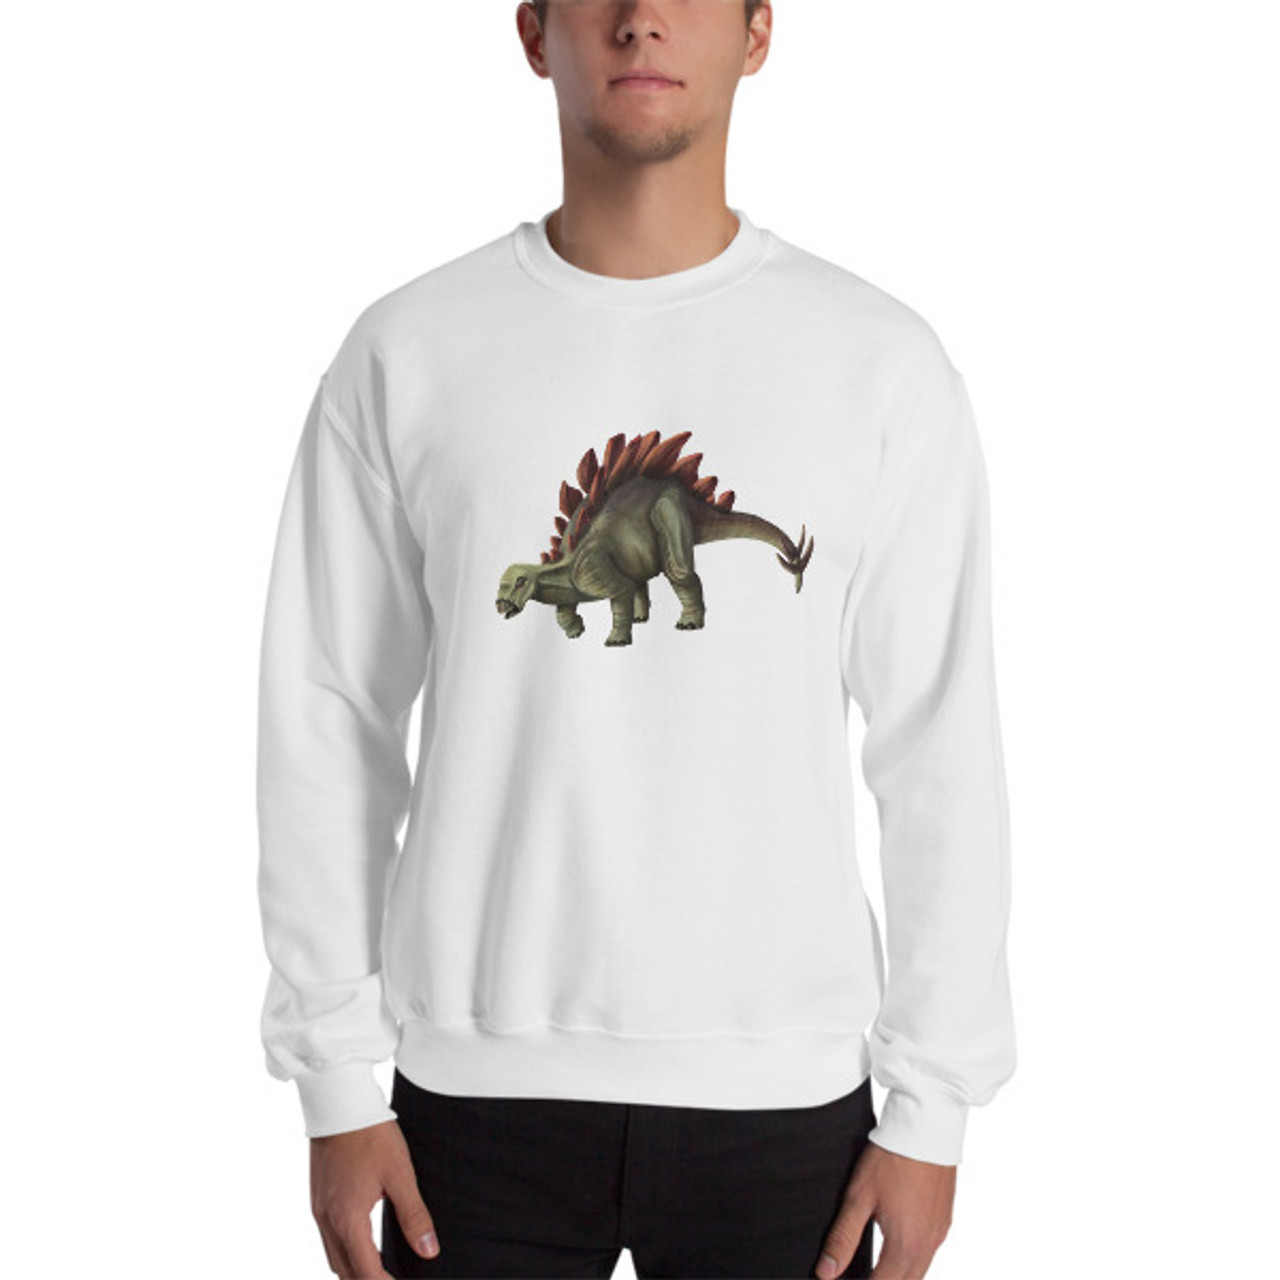 Stegosaurus II Sweatshirt - The Dino Reserve